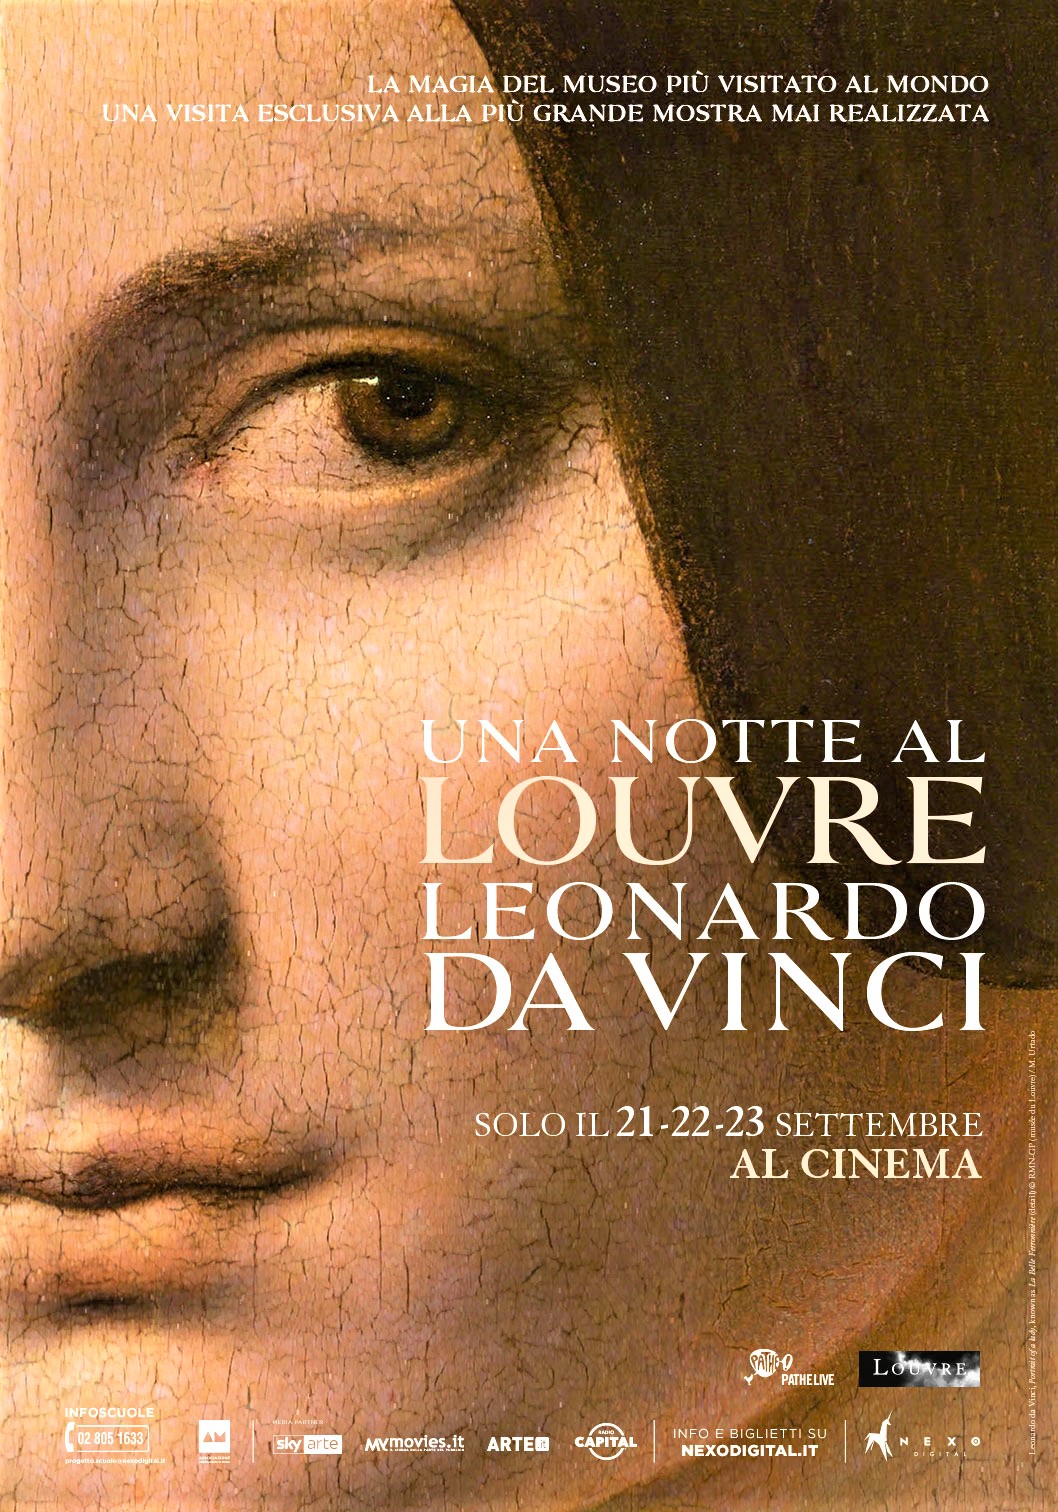 Al cinema Leonardo da Vinci